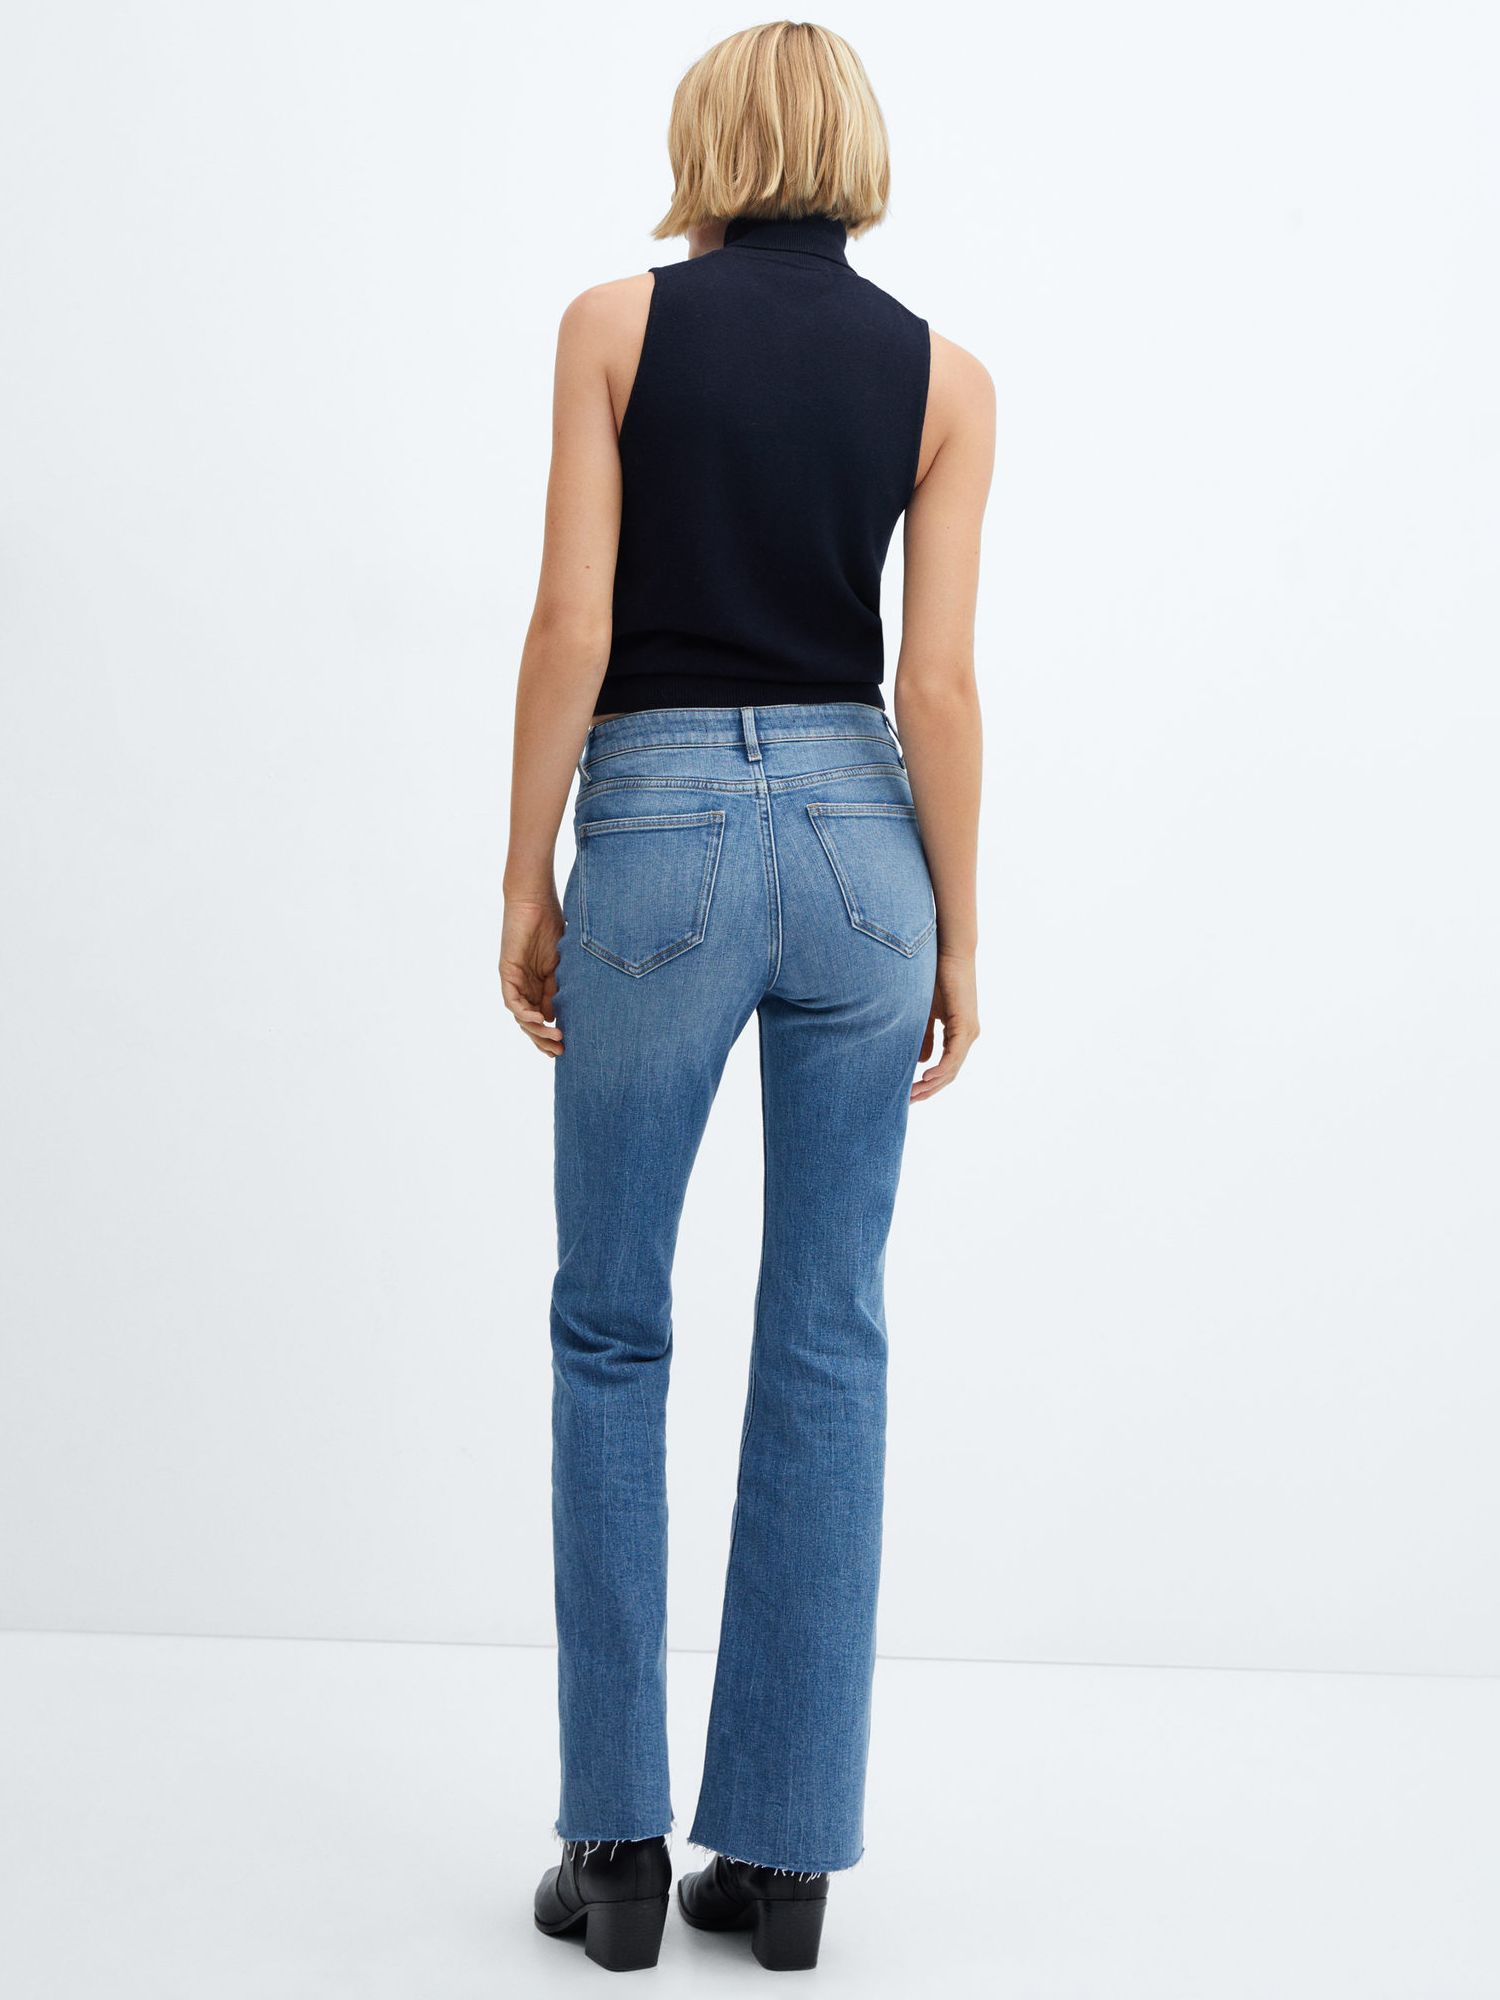 Mango Fiona Medium Rise Flared Jeans, Open Blue at John Lewis & Partners